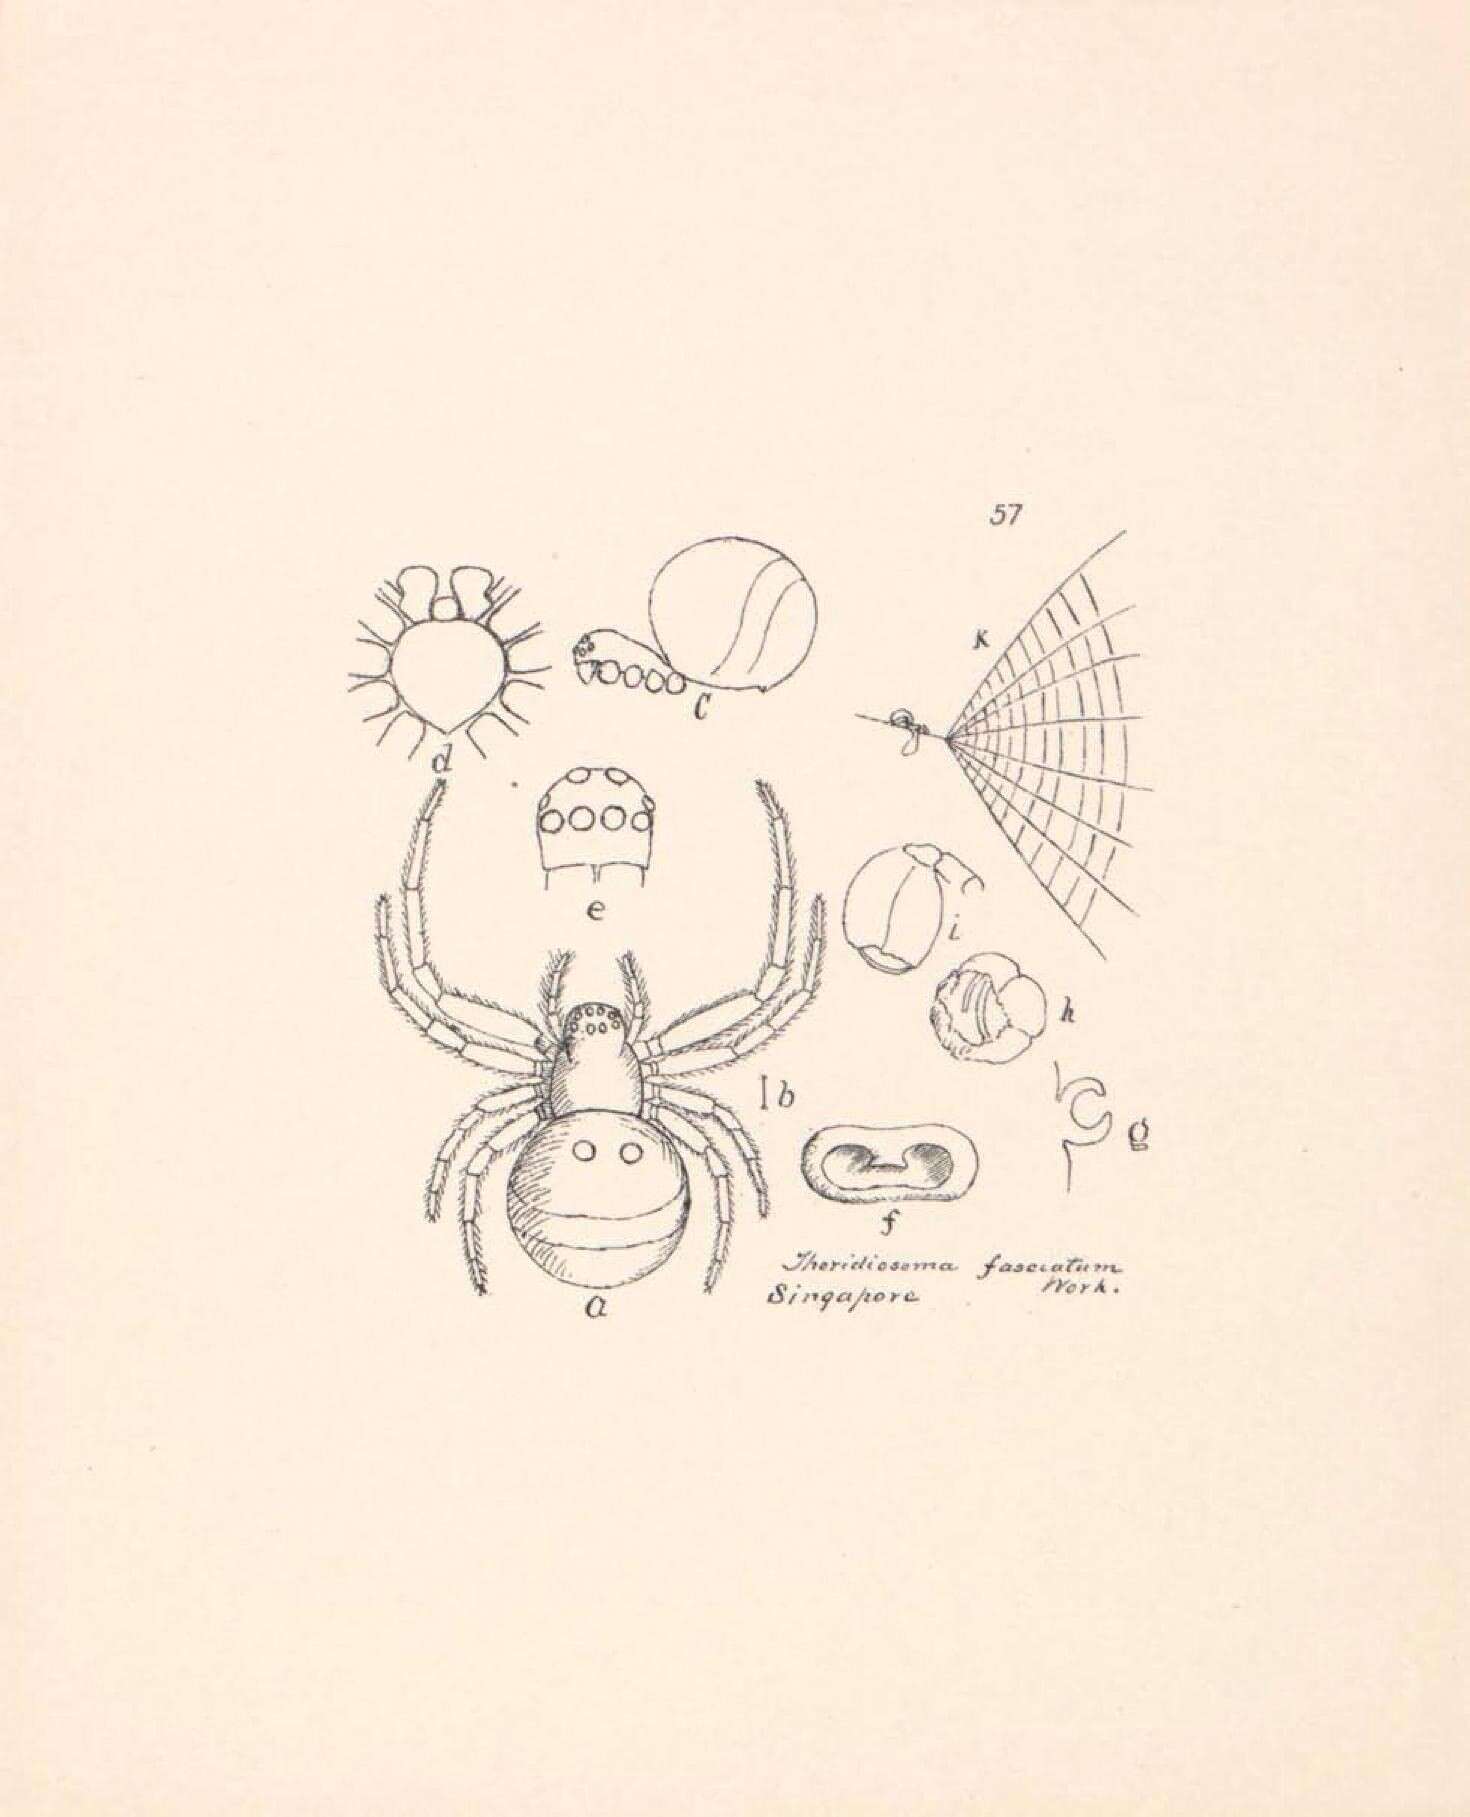 Image of Theridiosoma fasciatum Workman 1896